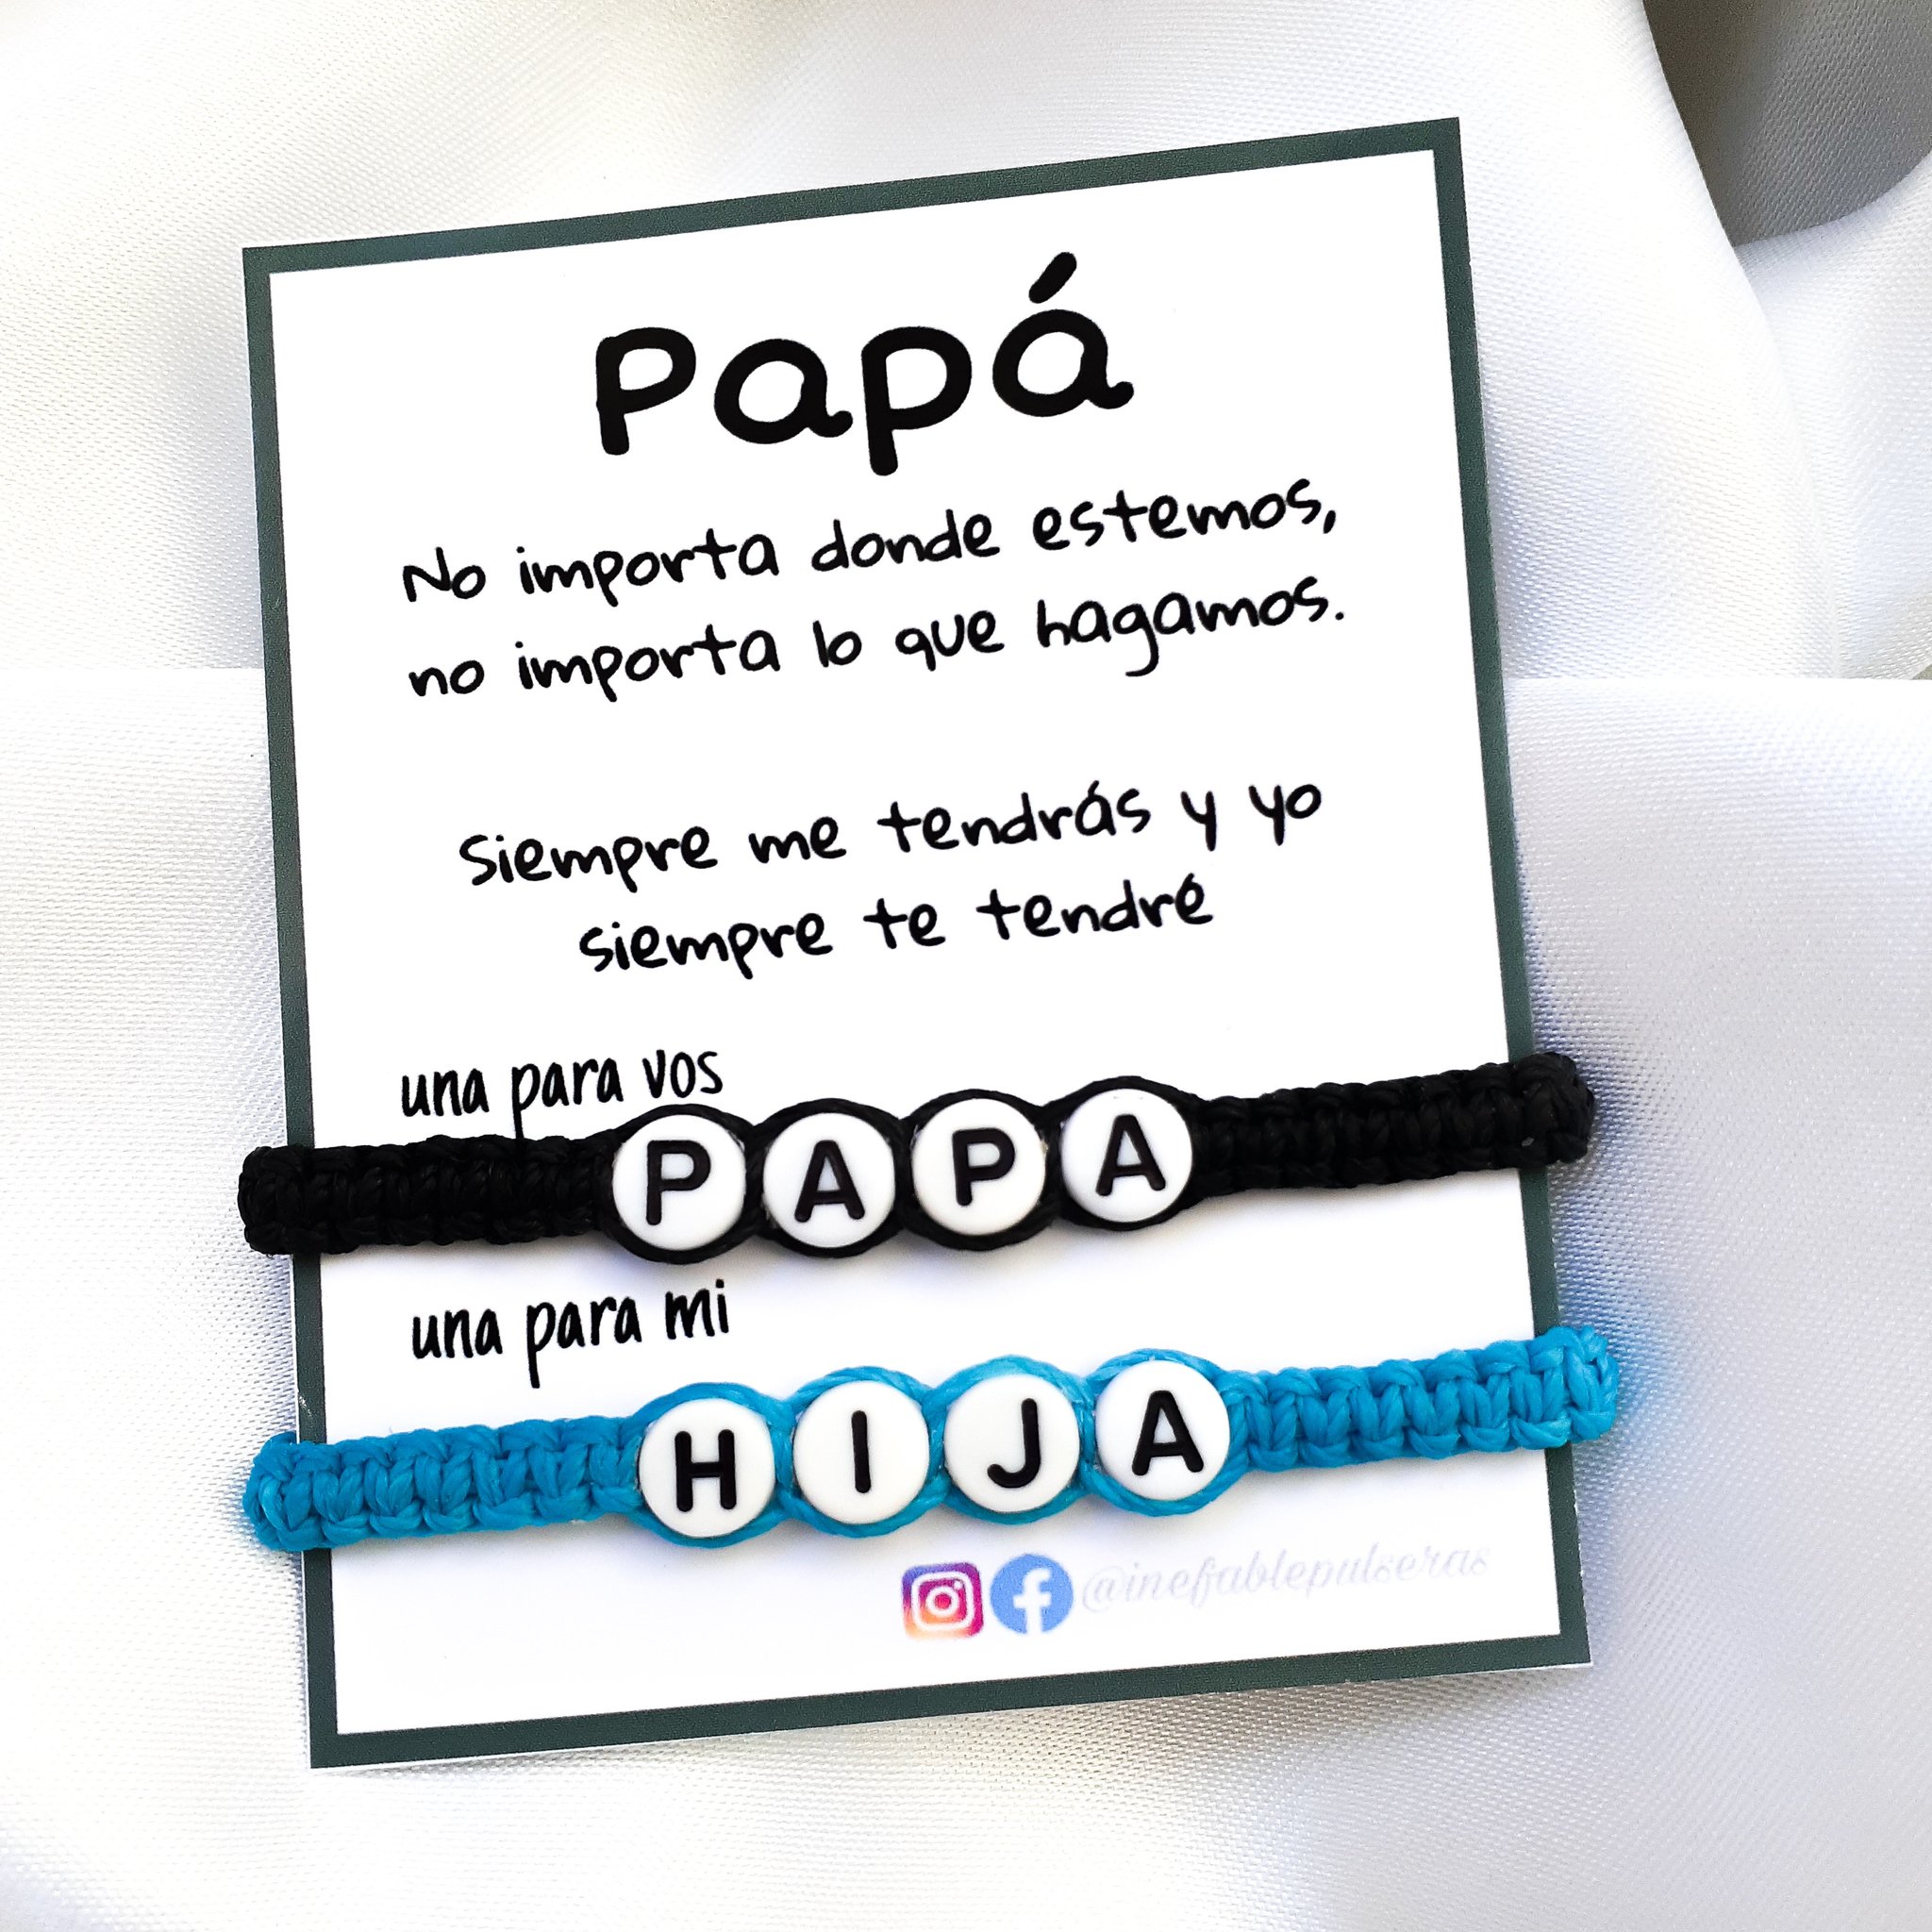 INEFABLE PULSERAS on Twitter: "PAPÁ E HIJA👨‍👧‍👦¡Encargala en nuestro Instagram para regalarle a papá en su día ! Blanca https://t.co/n7OyOJyLIB https://t.co/FxcSyKyaNX" / Twitter